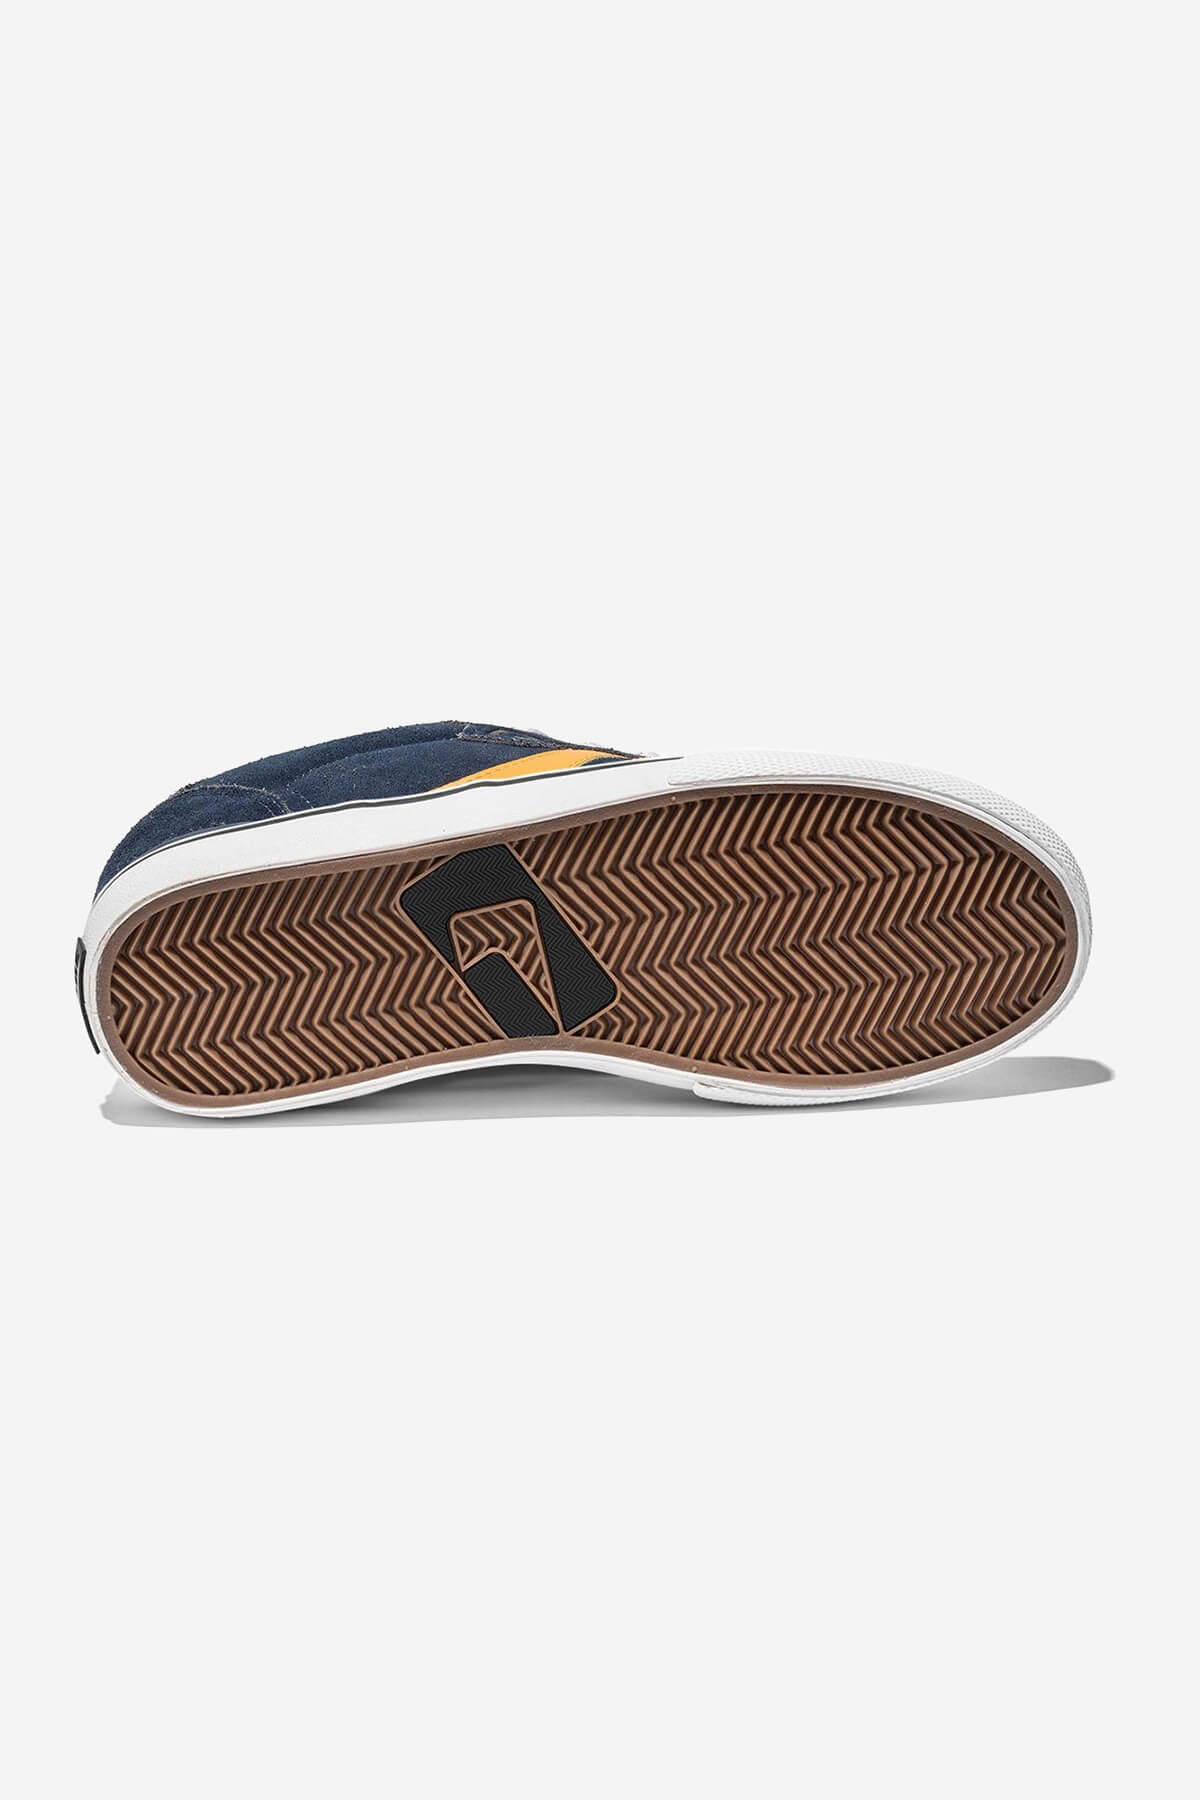 Globe - Encore 2 - Navy/Yellow - skateboard Sapatos